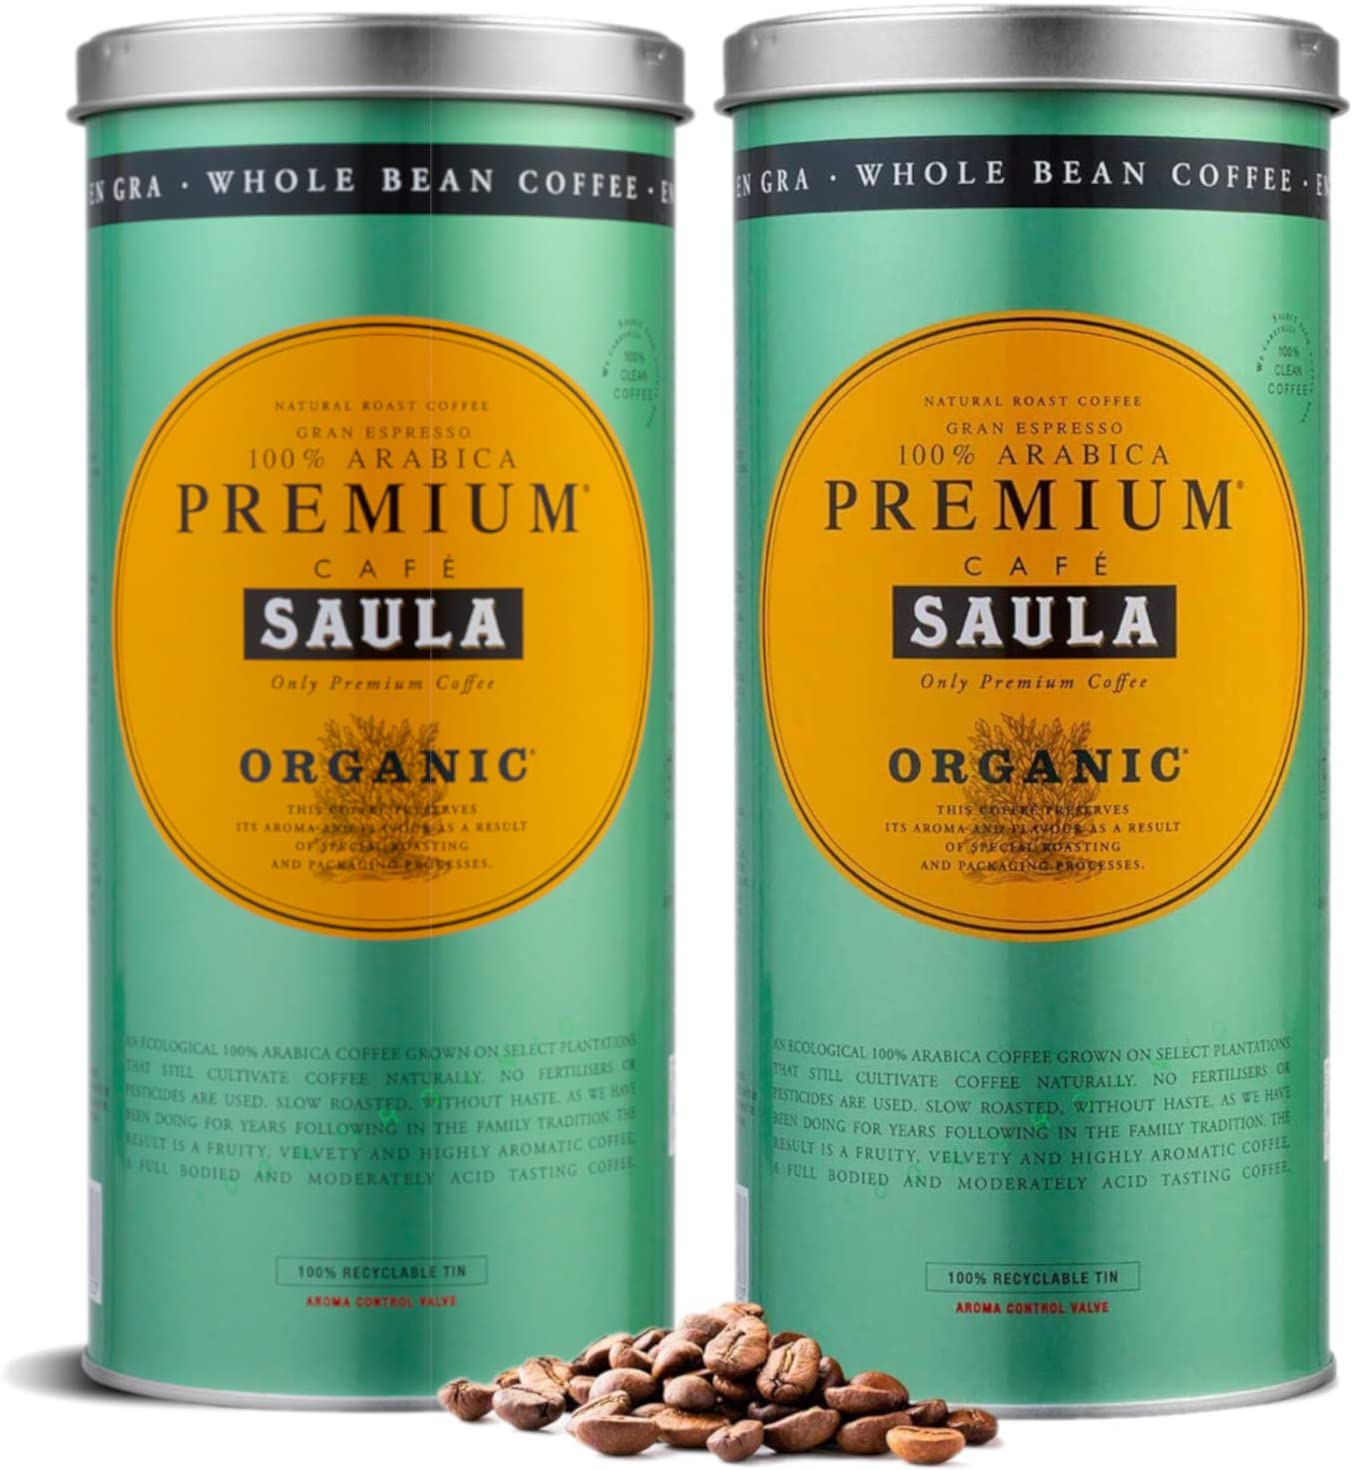 cafe organico vs cafe normal